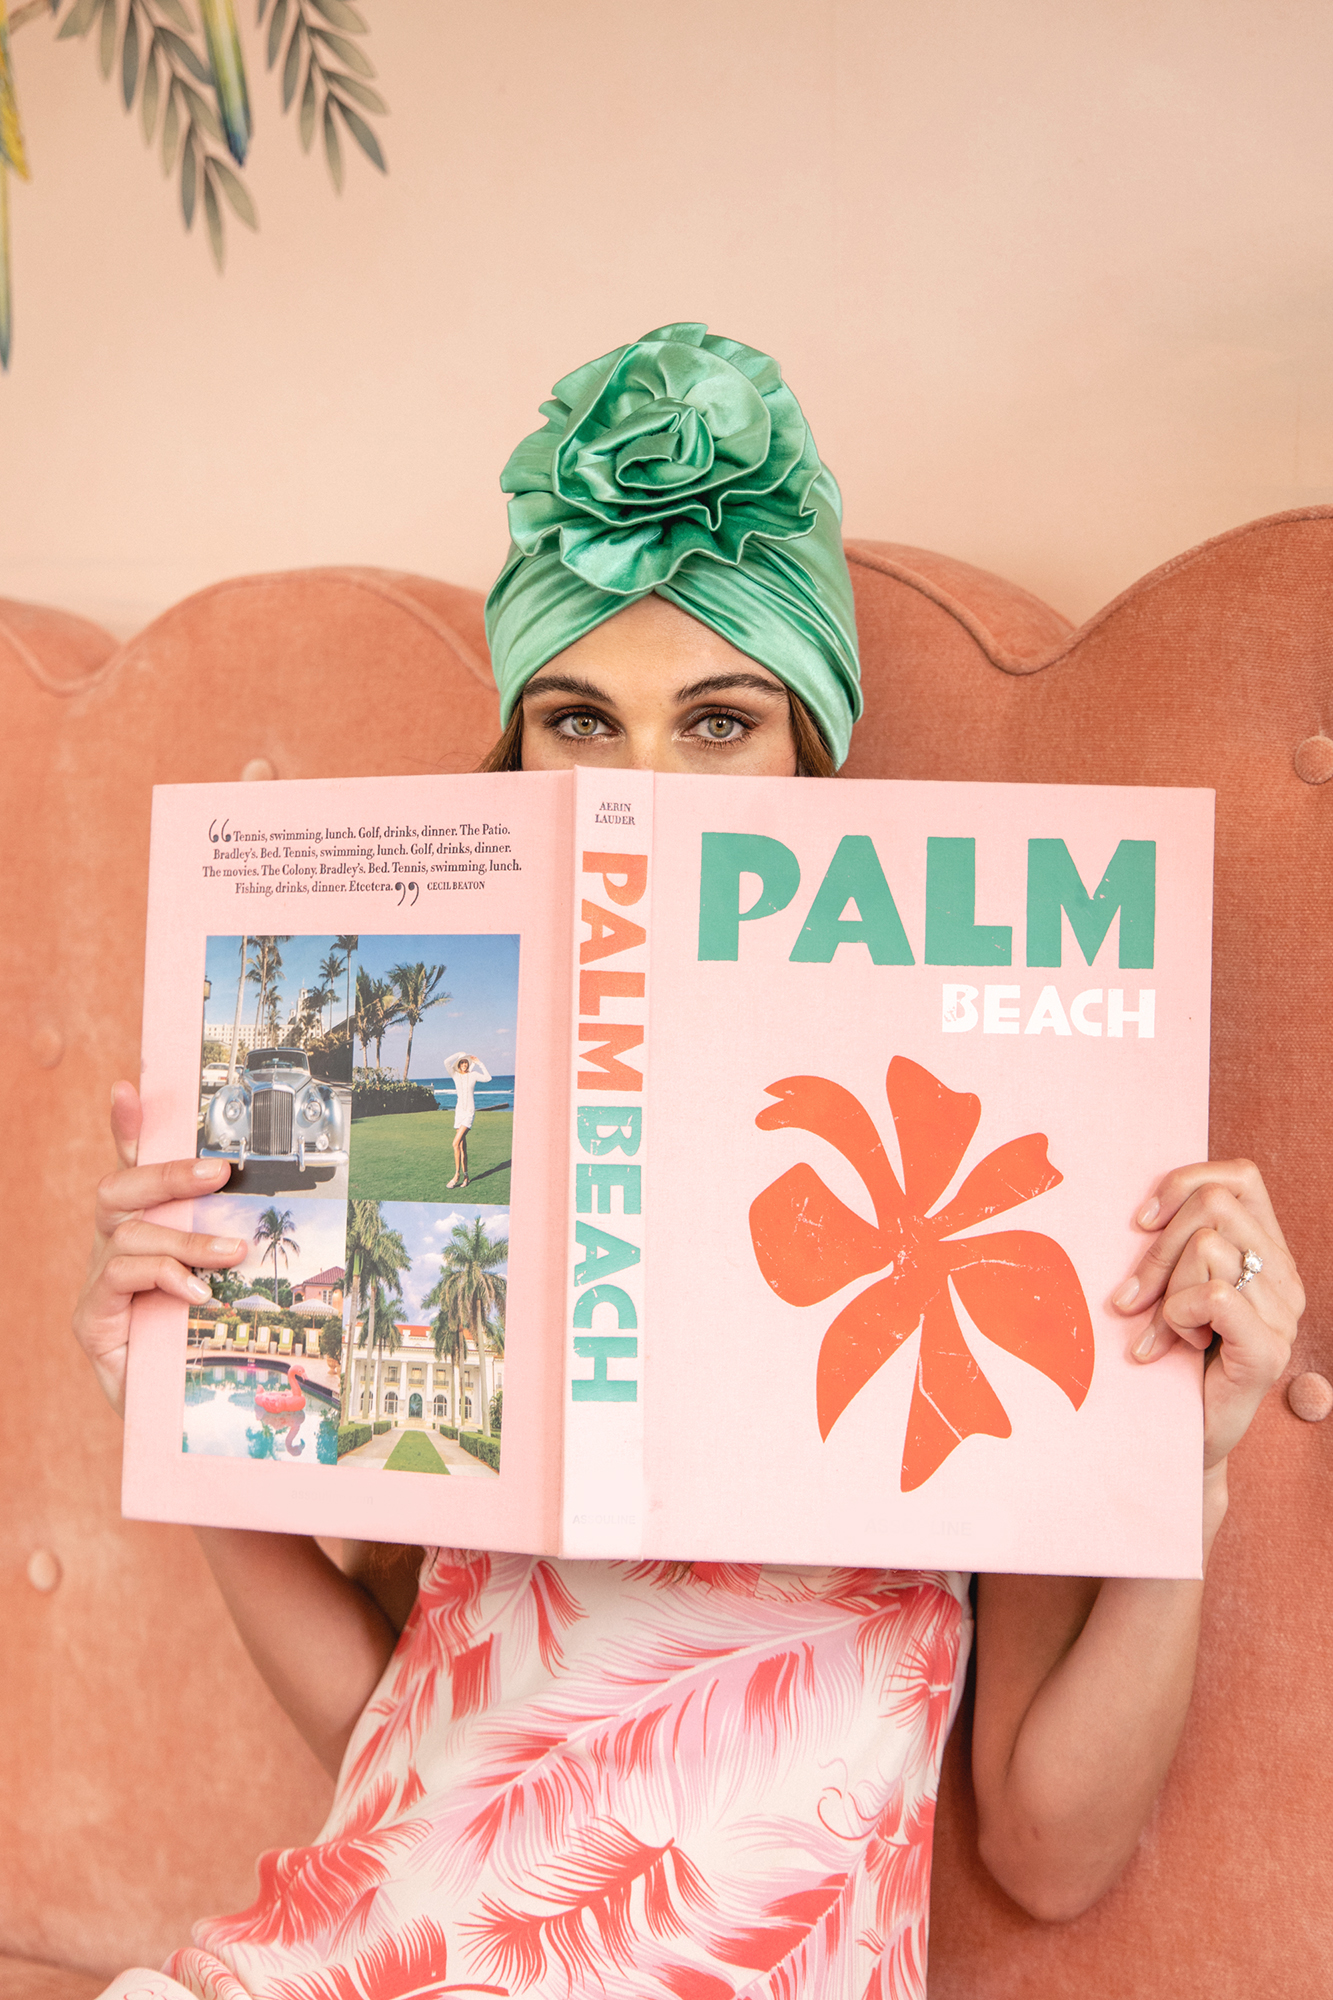 Palm Beach by the book